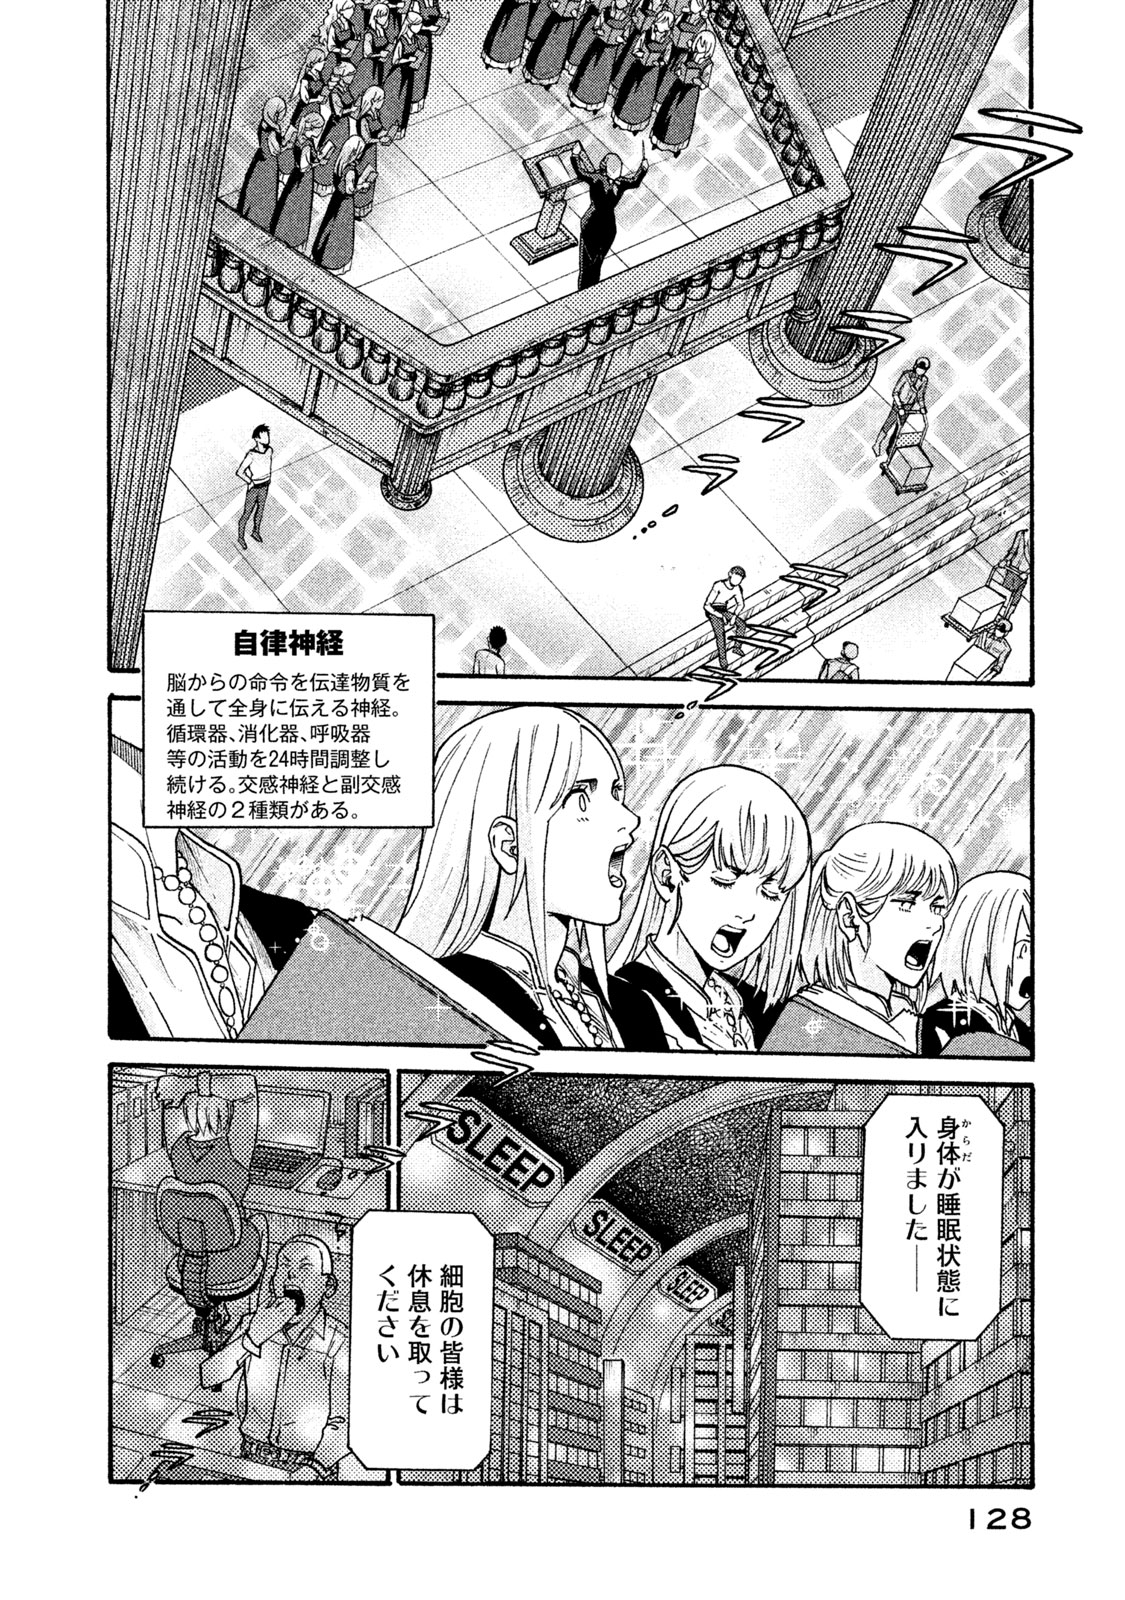 Hataraku Saibou BLACK - Chapter 31 - Page 4